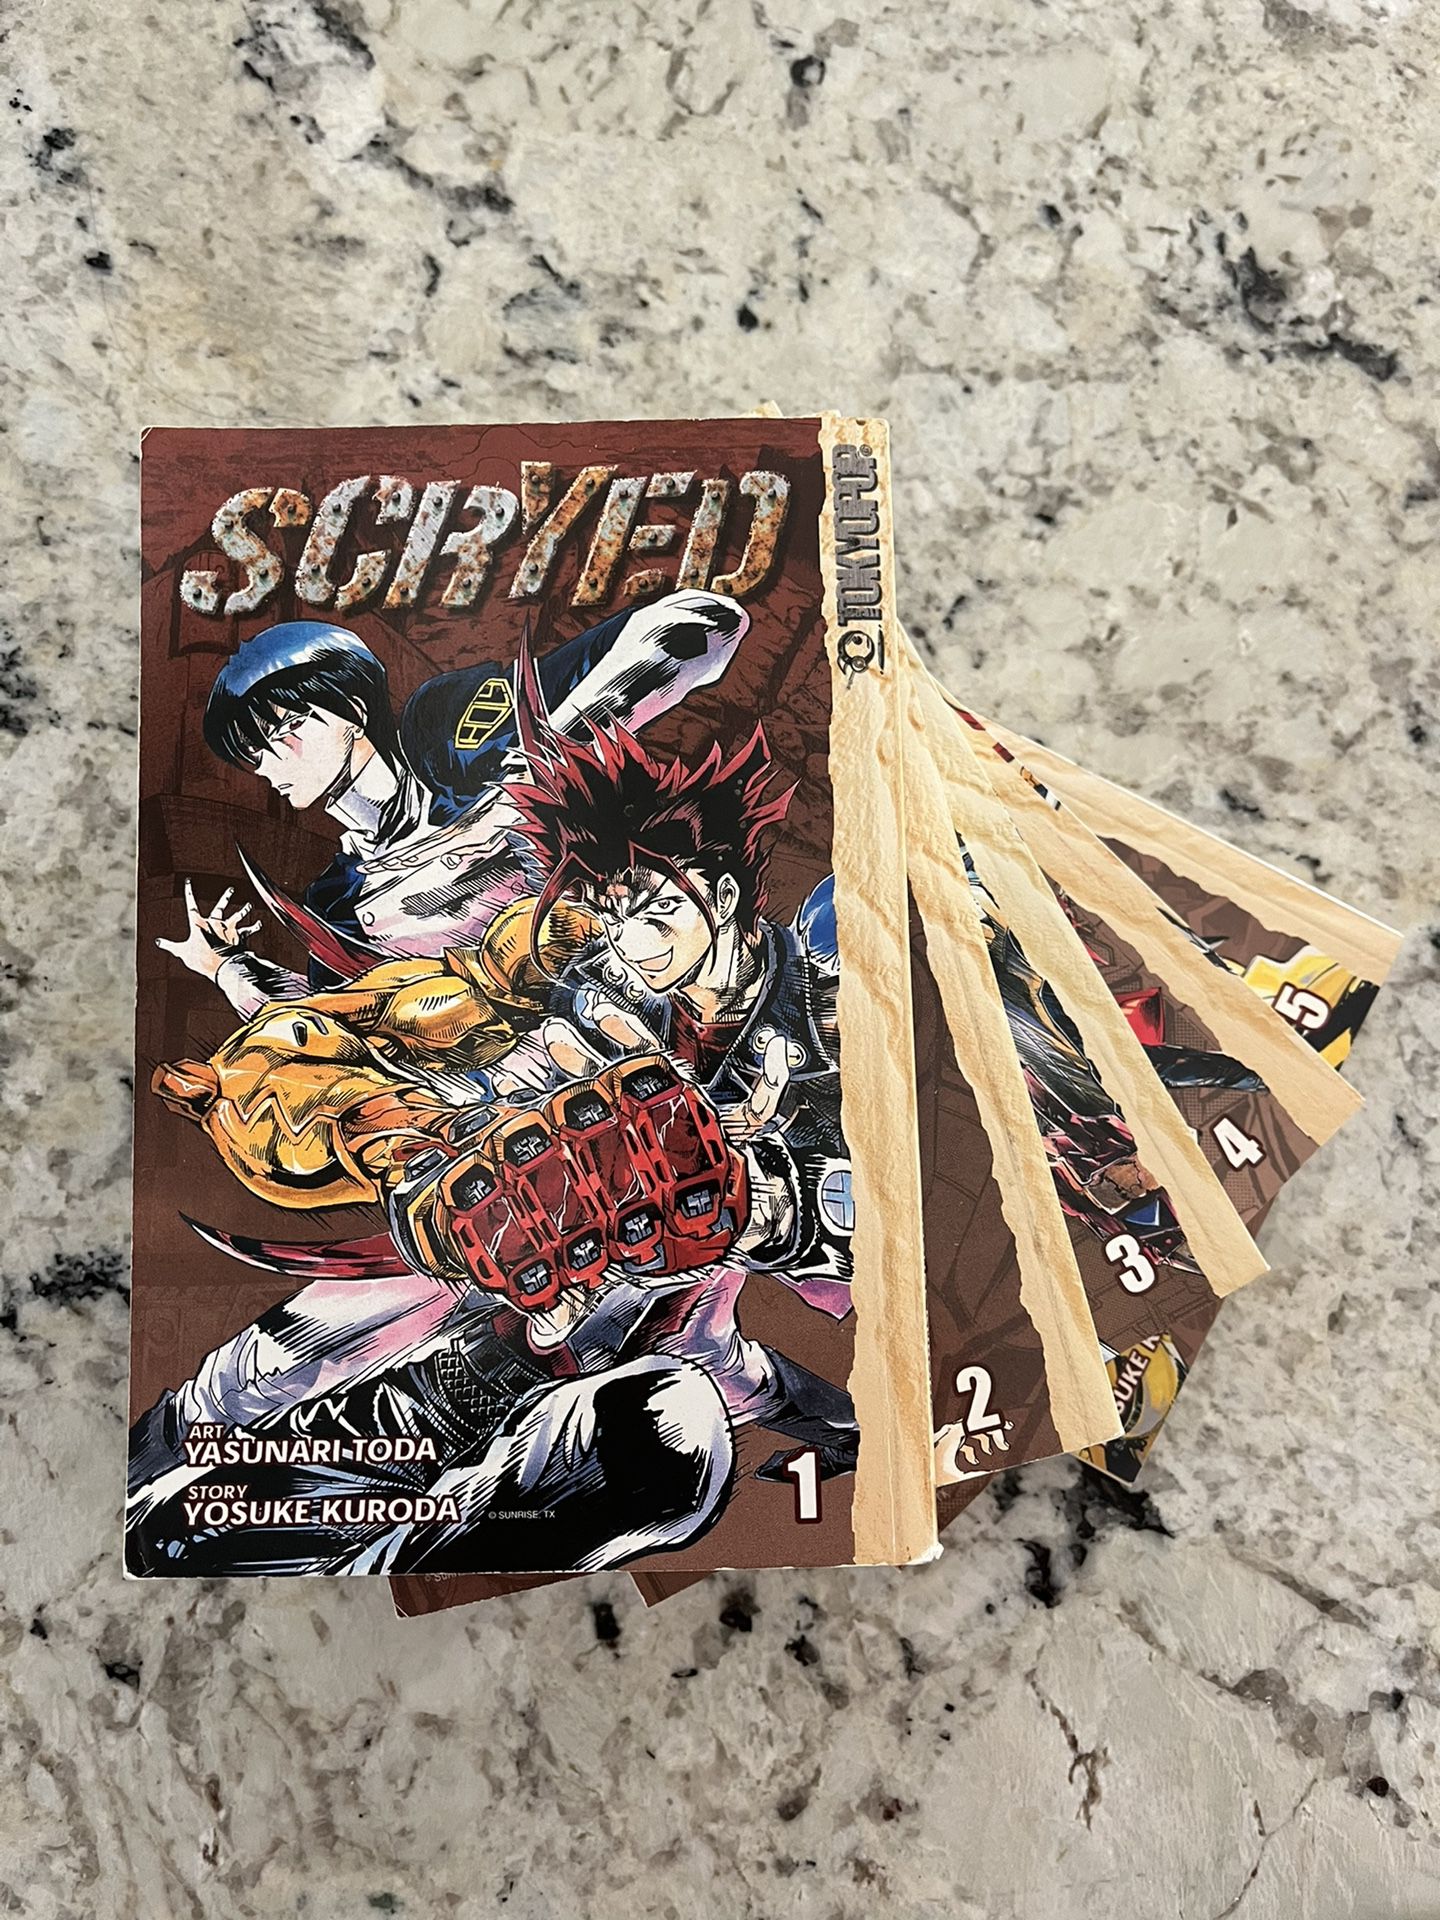 Scryed Manga - Volumes 1-5*